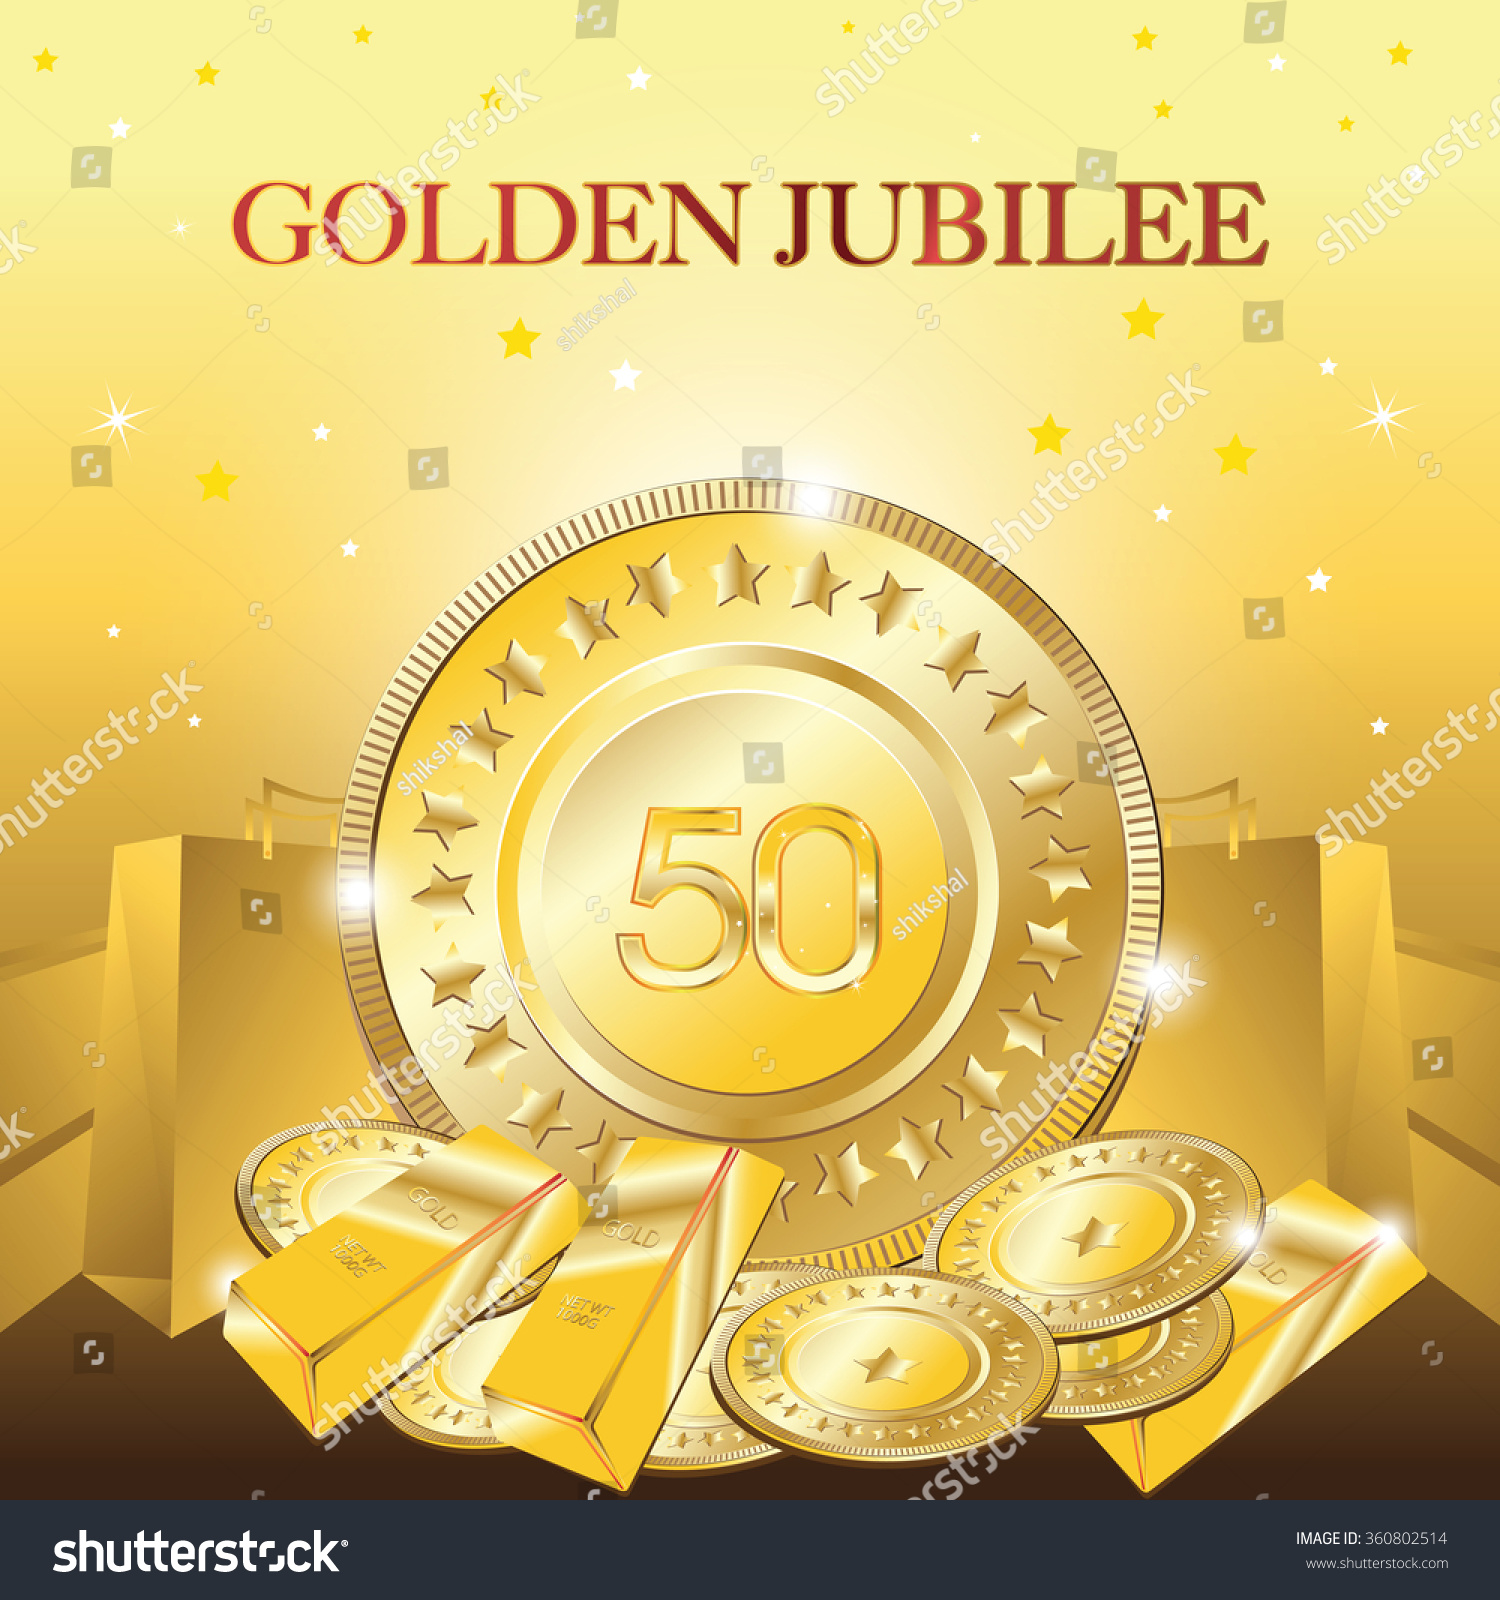 SVG of golden jubilee, vector golden bars
 svg